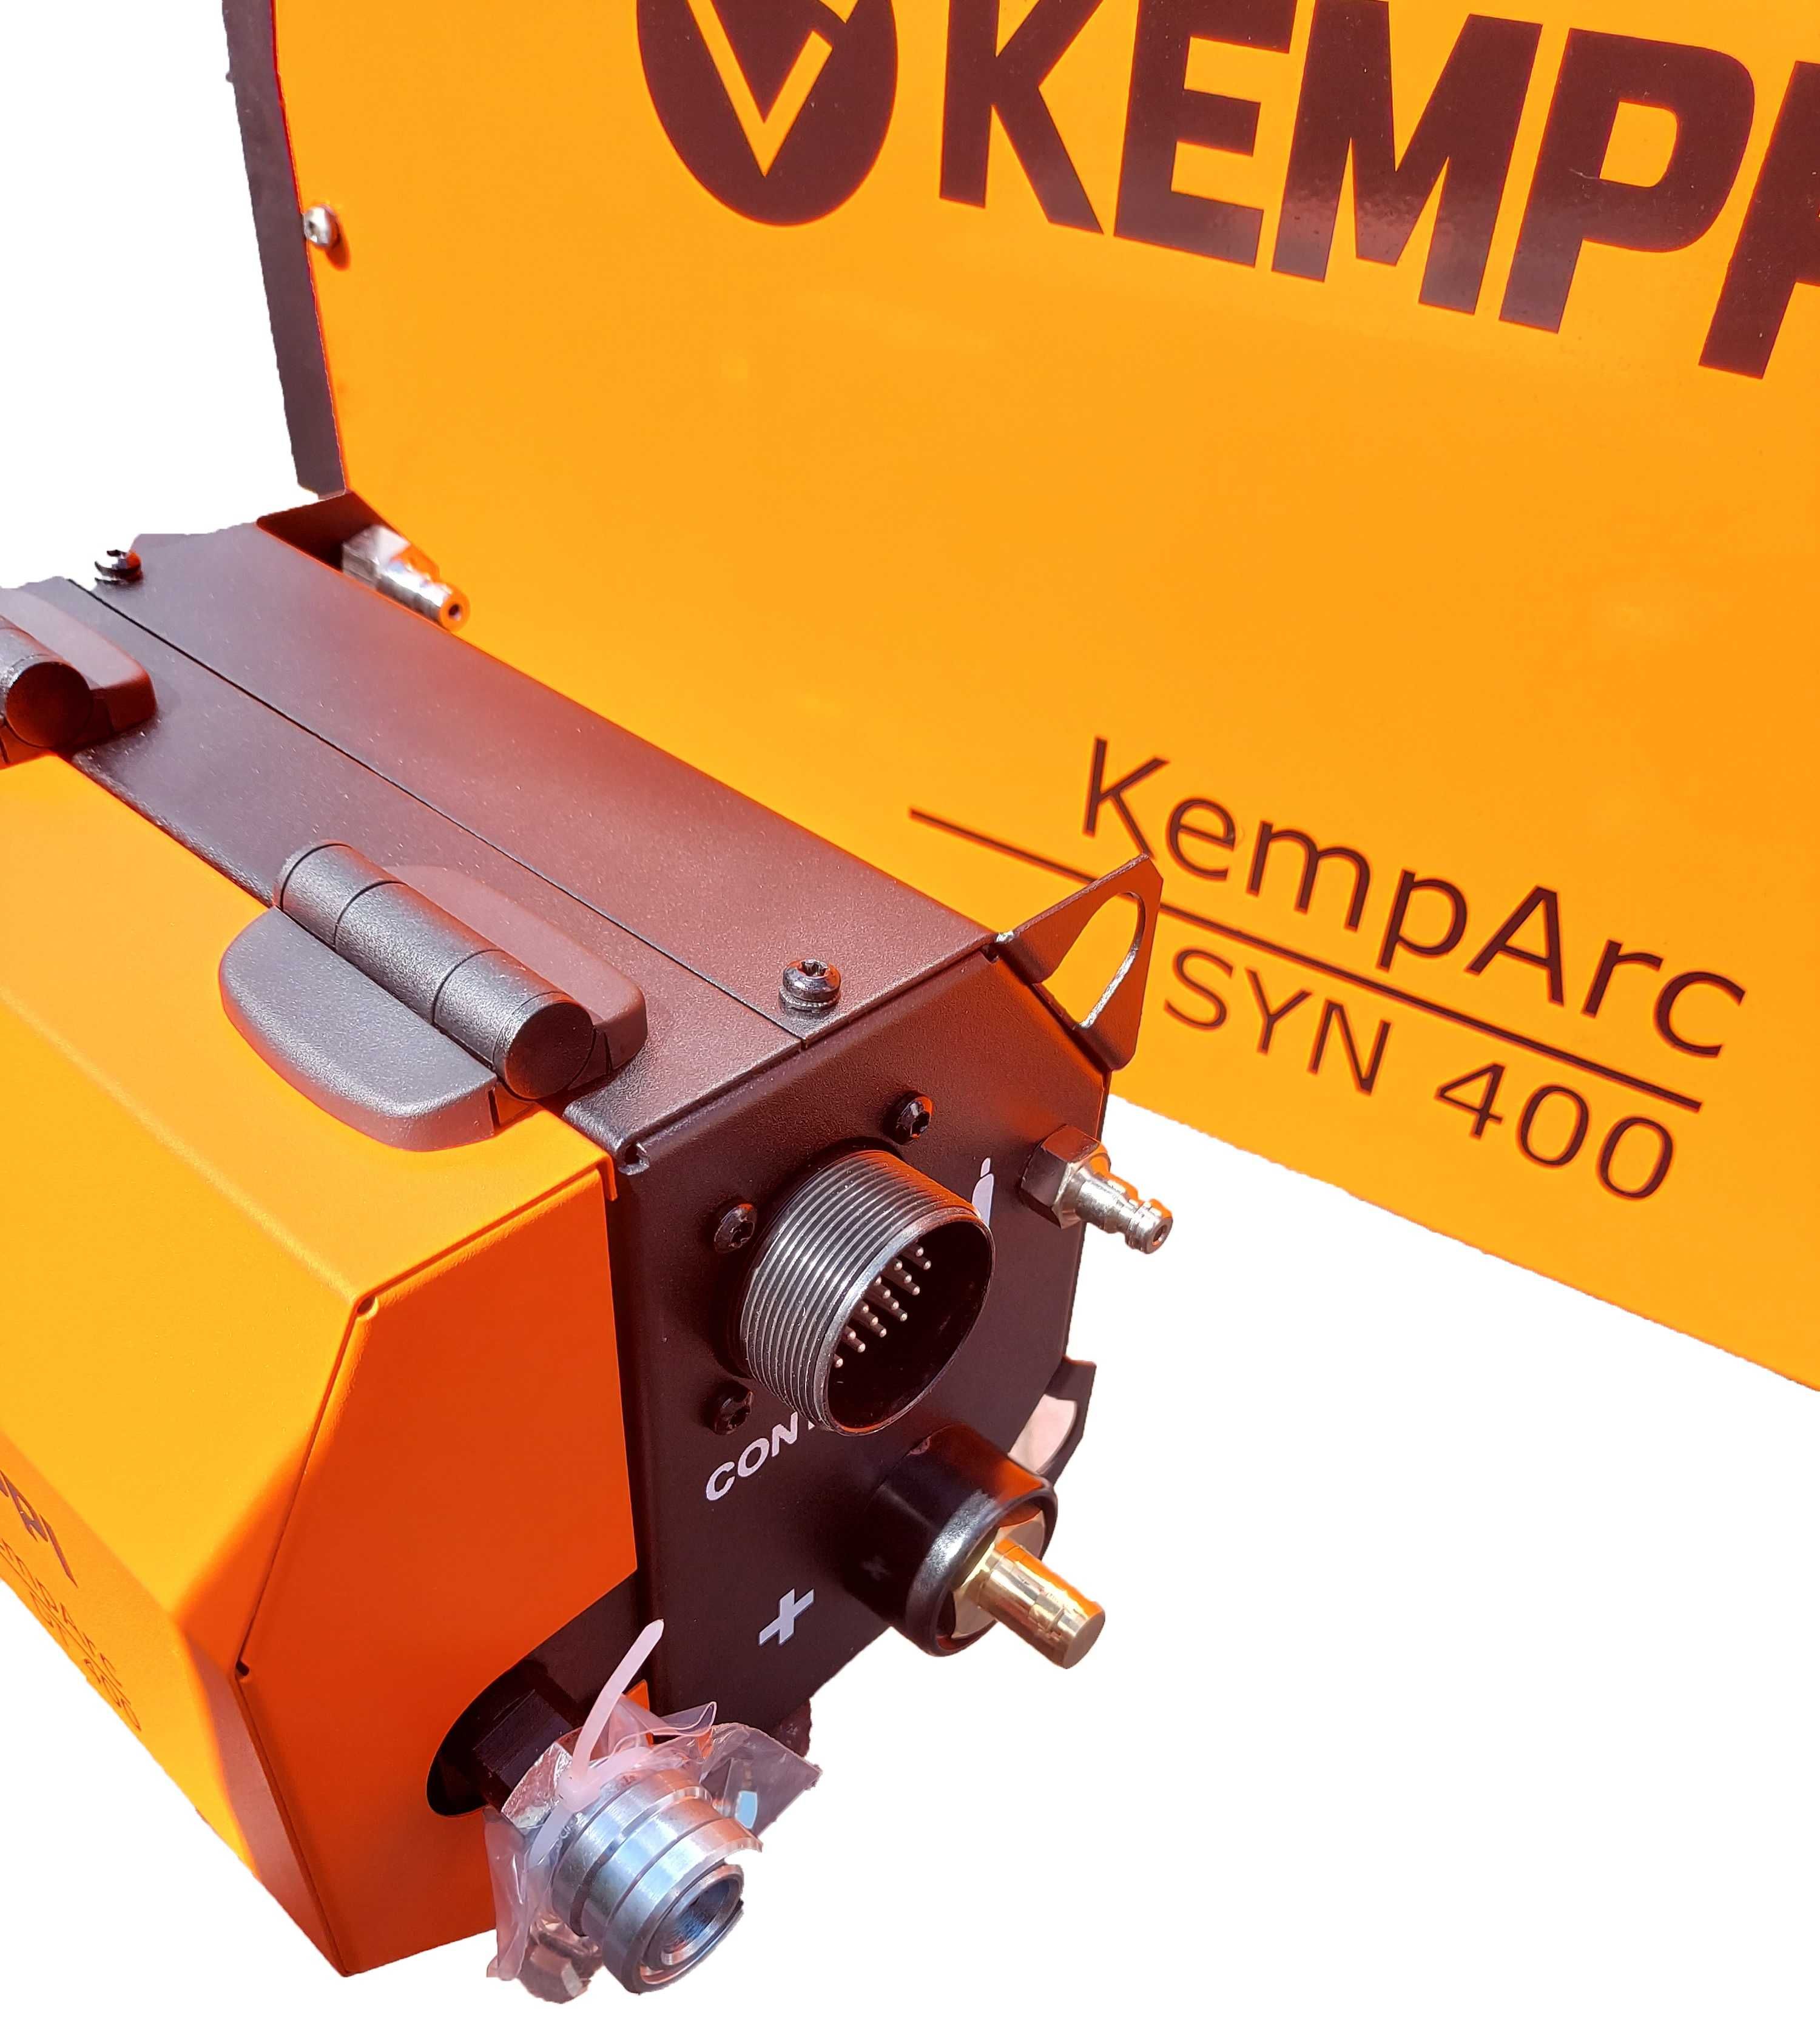 Kemppi Kemparc SYN 400A Robot CNC NewPodajnik 2020